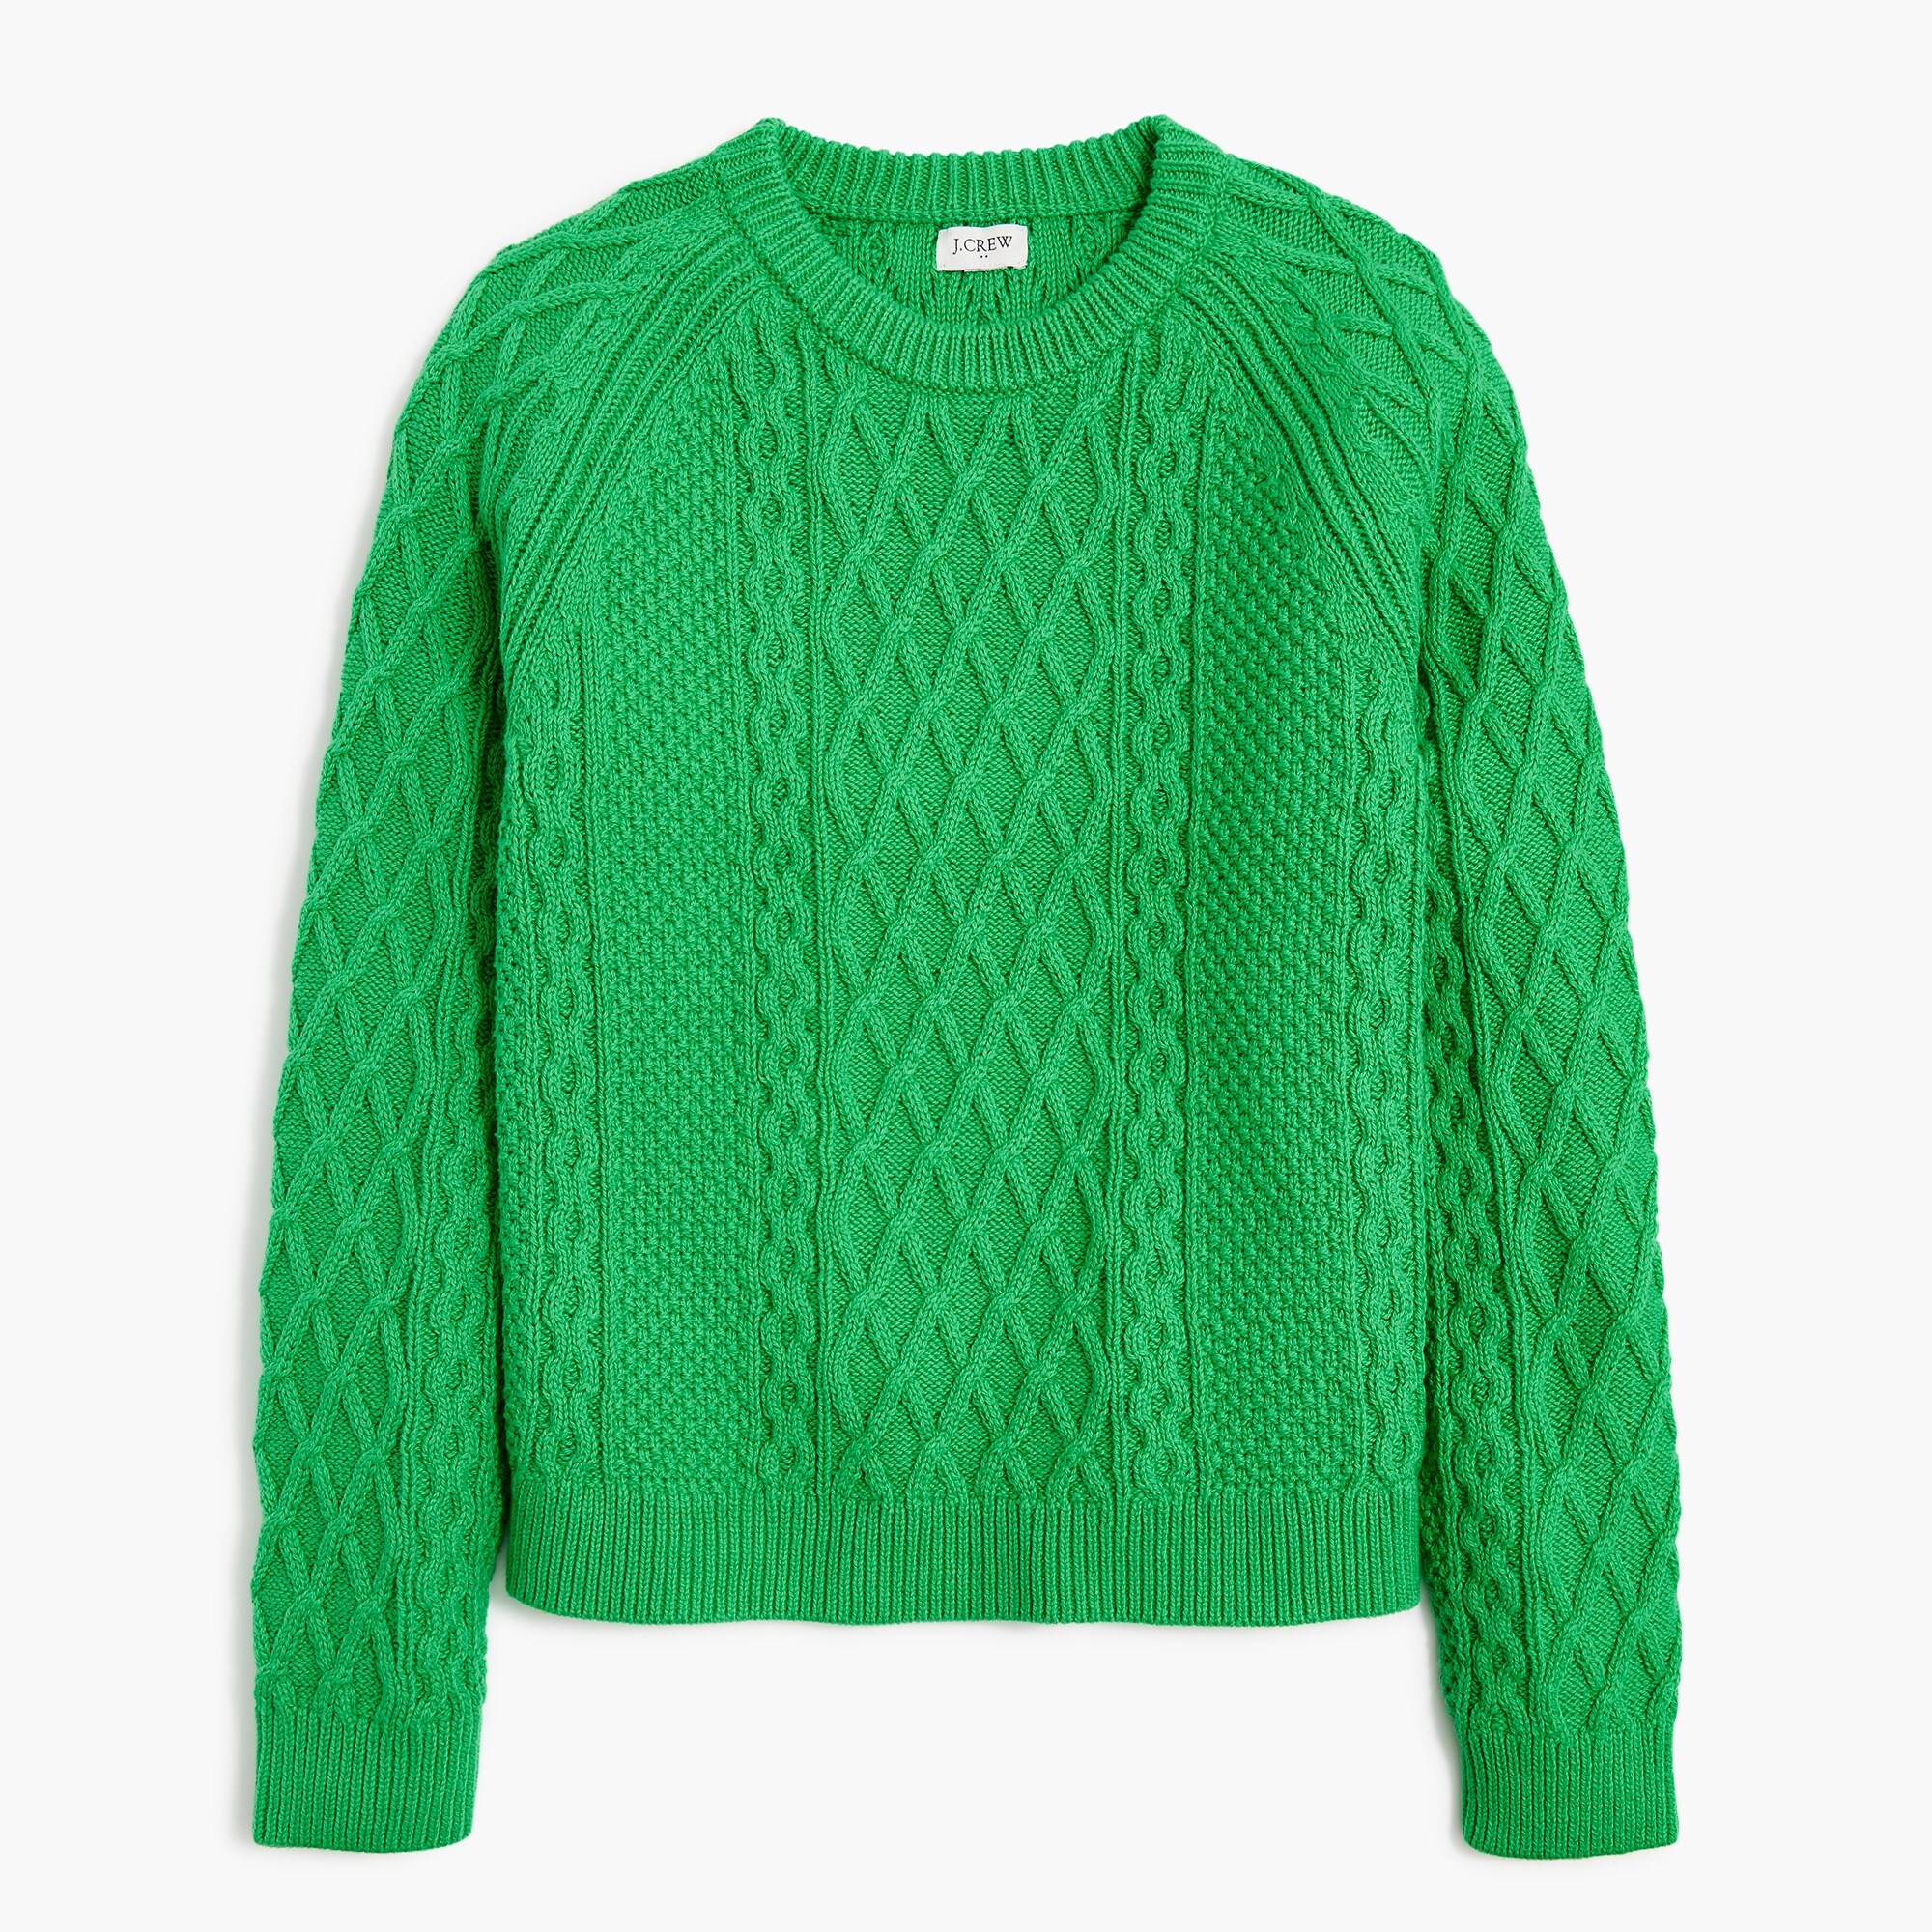  Cable crewneck sweater